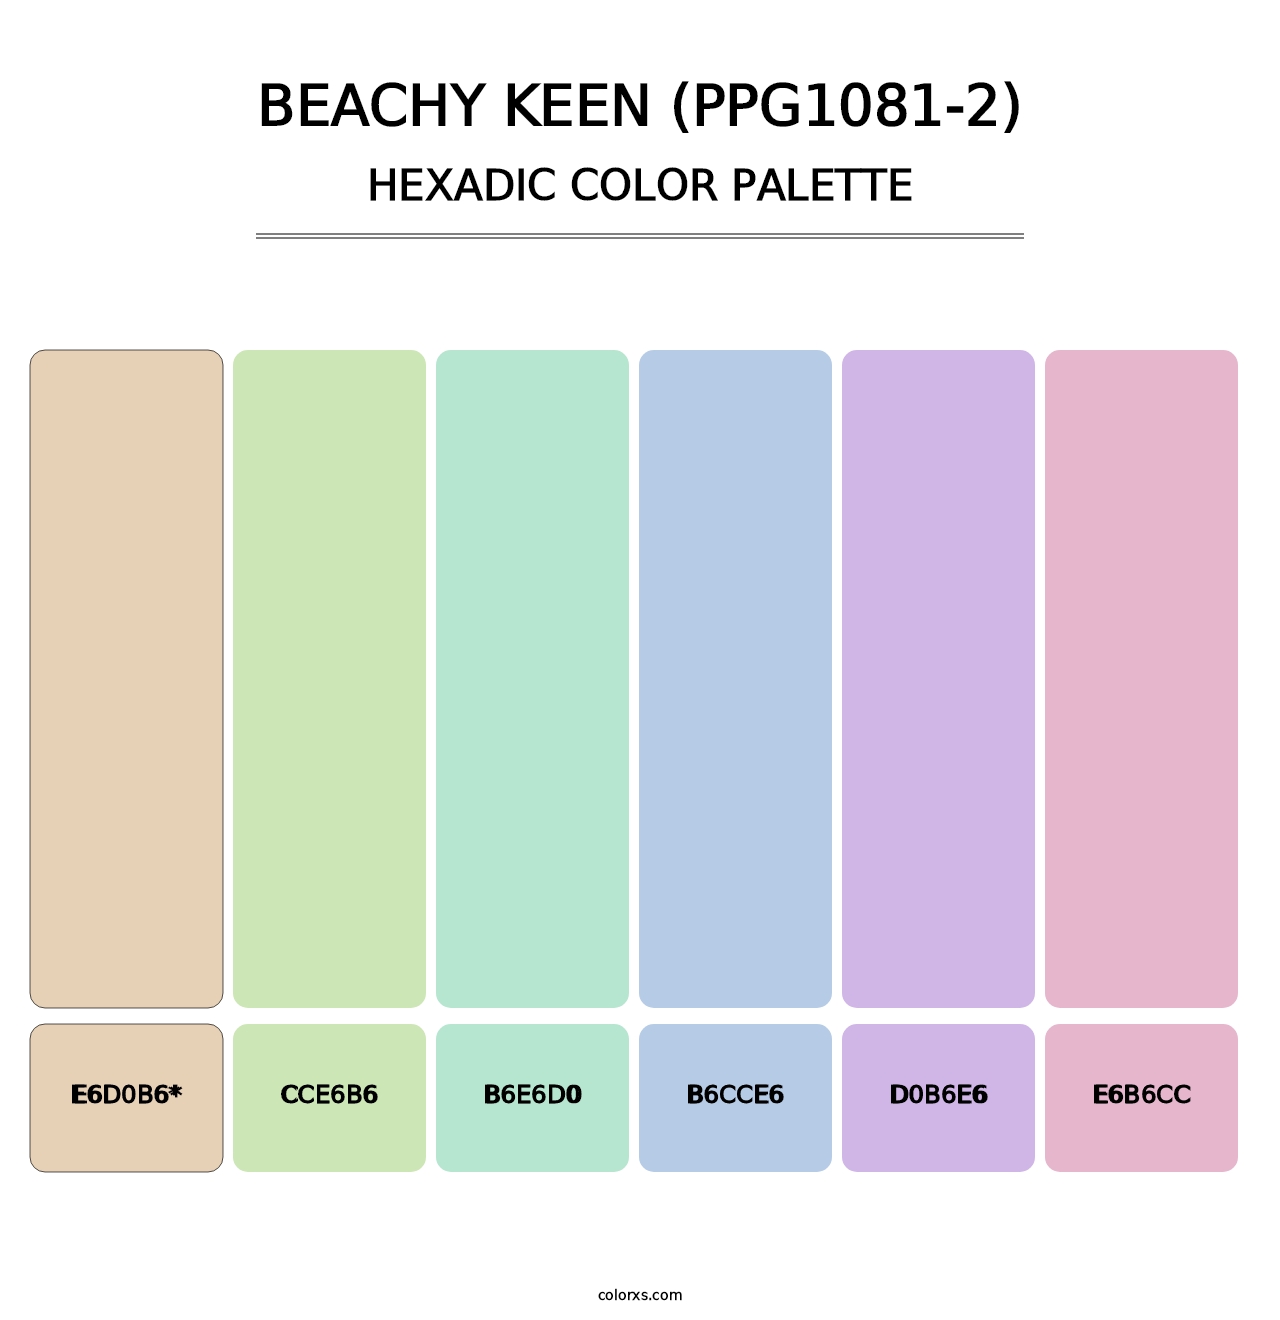 Beachy Keen (PPG1081-2) - Hexadic Color Palette